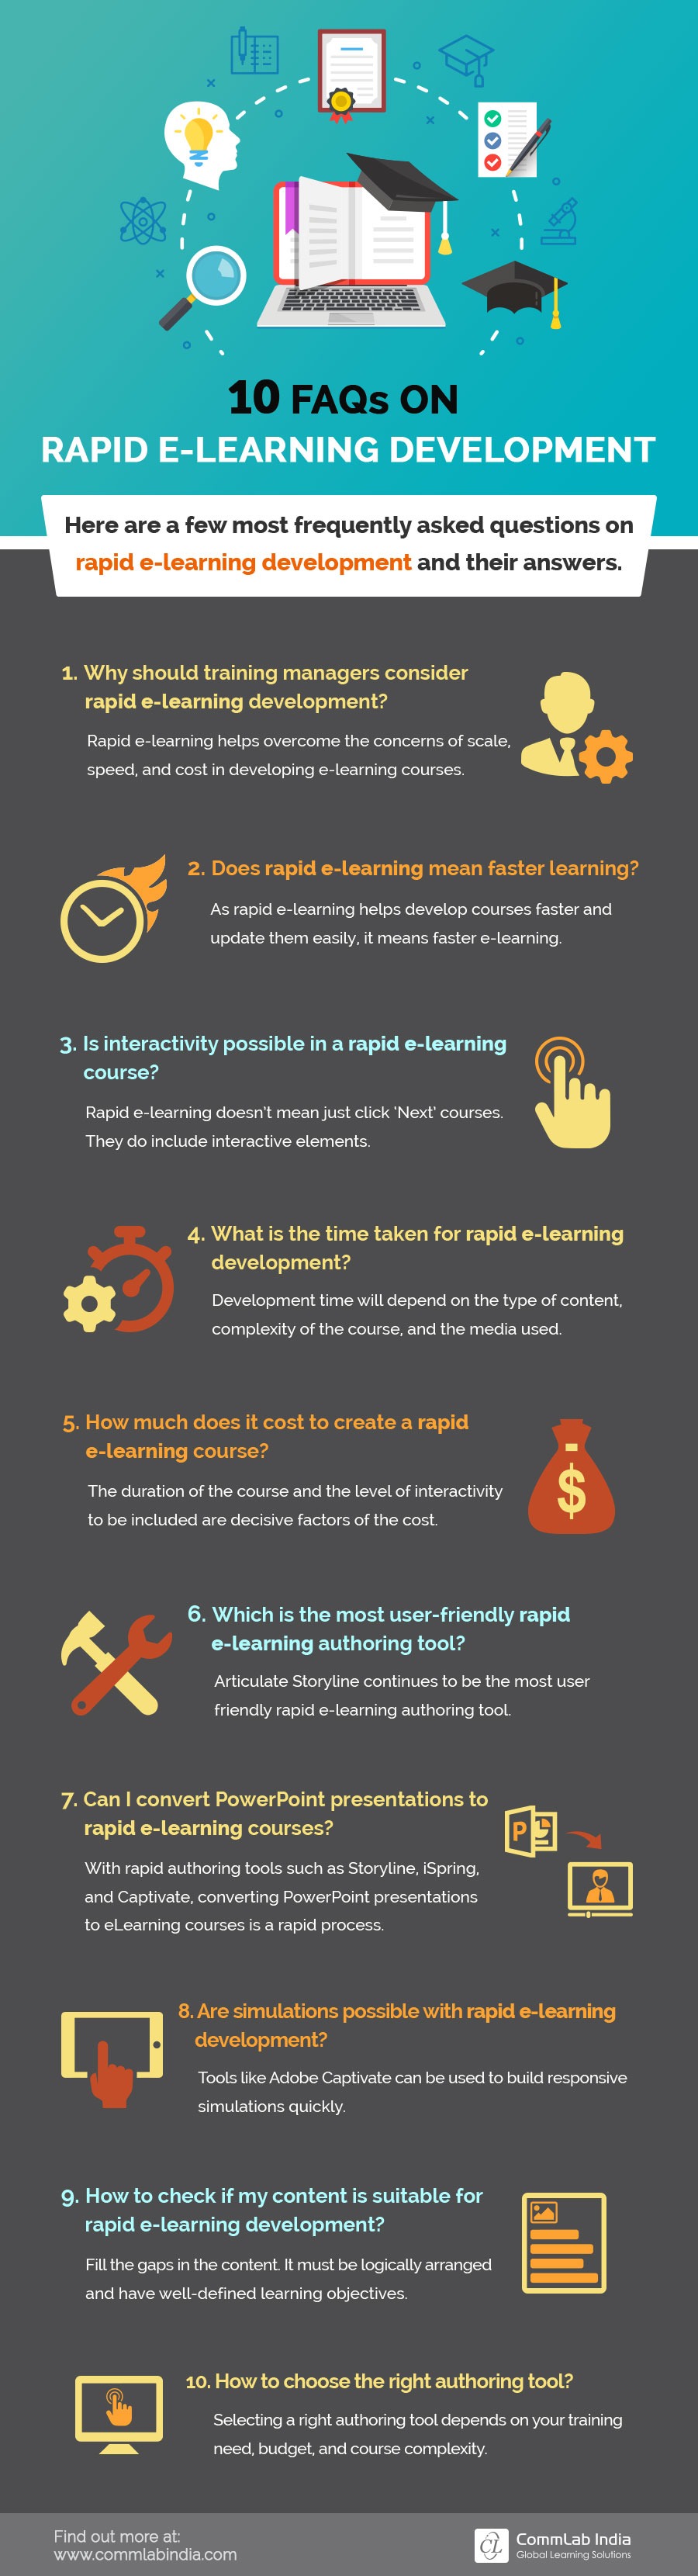 10 FAQs on Rapid E-learning Development [Infographic]